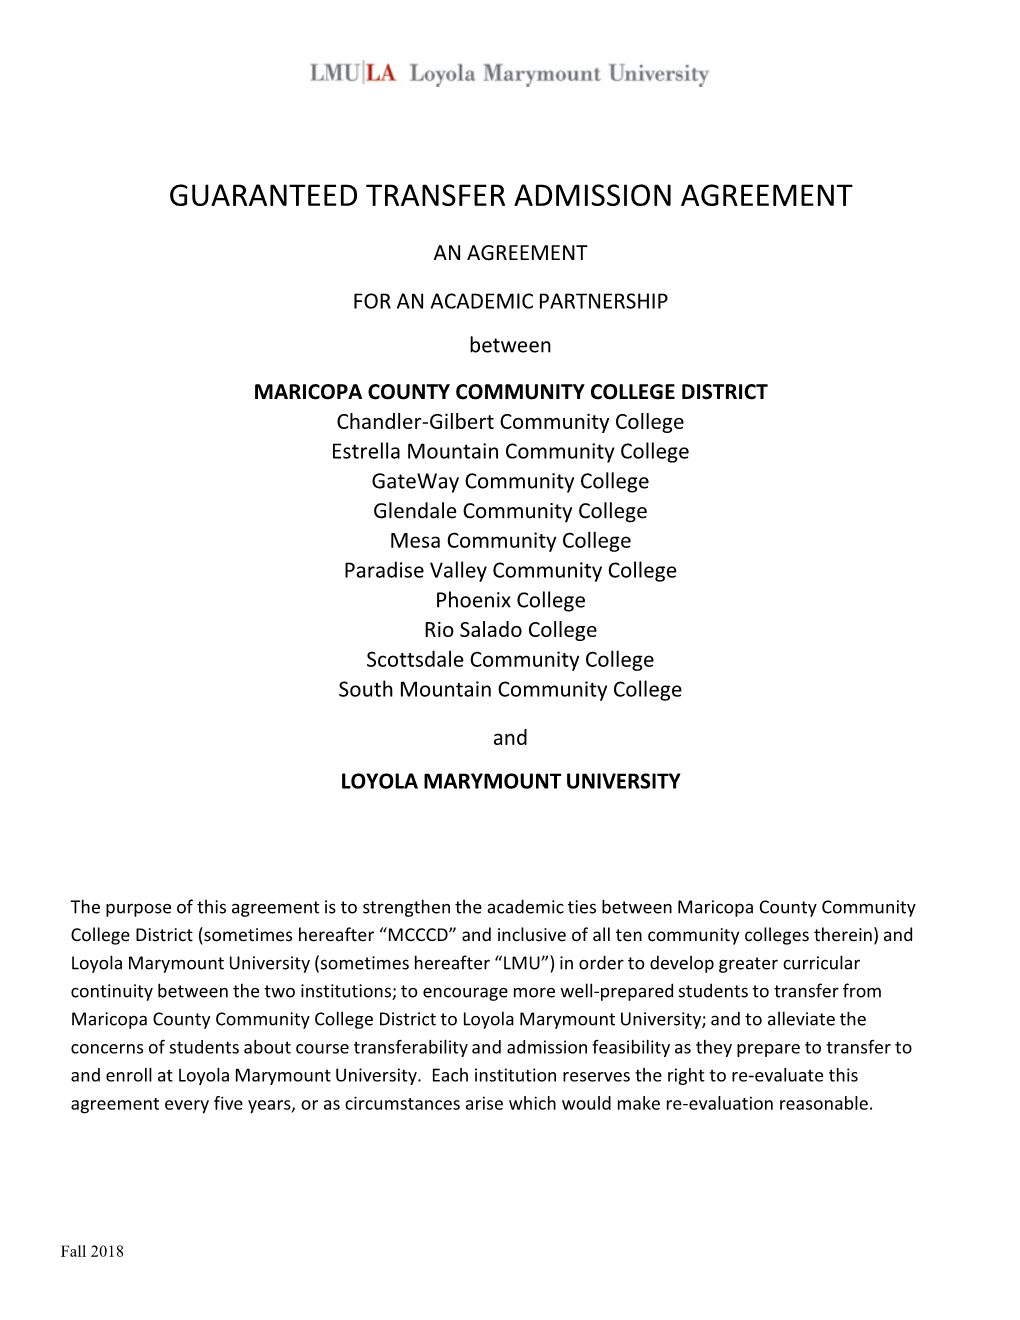 Guaranteed Transfer Admission Agreement